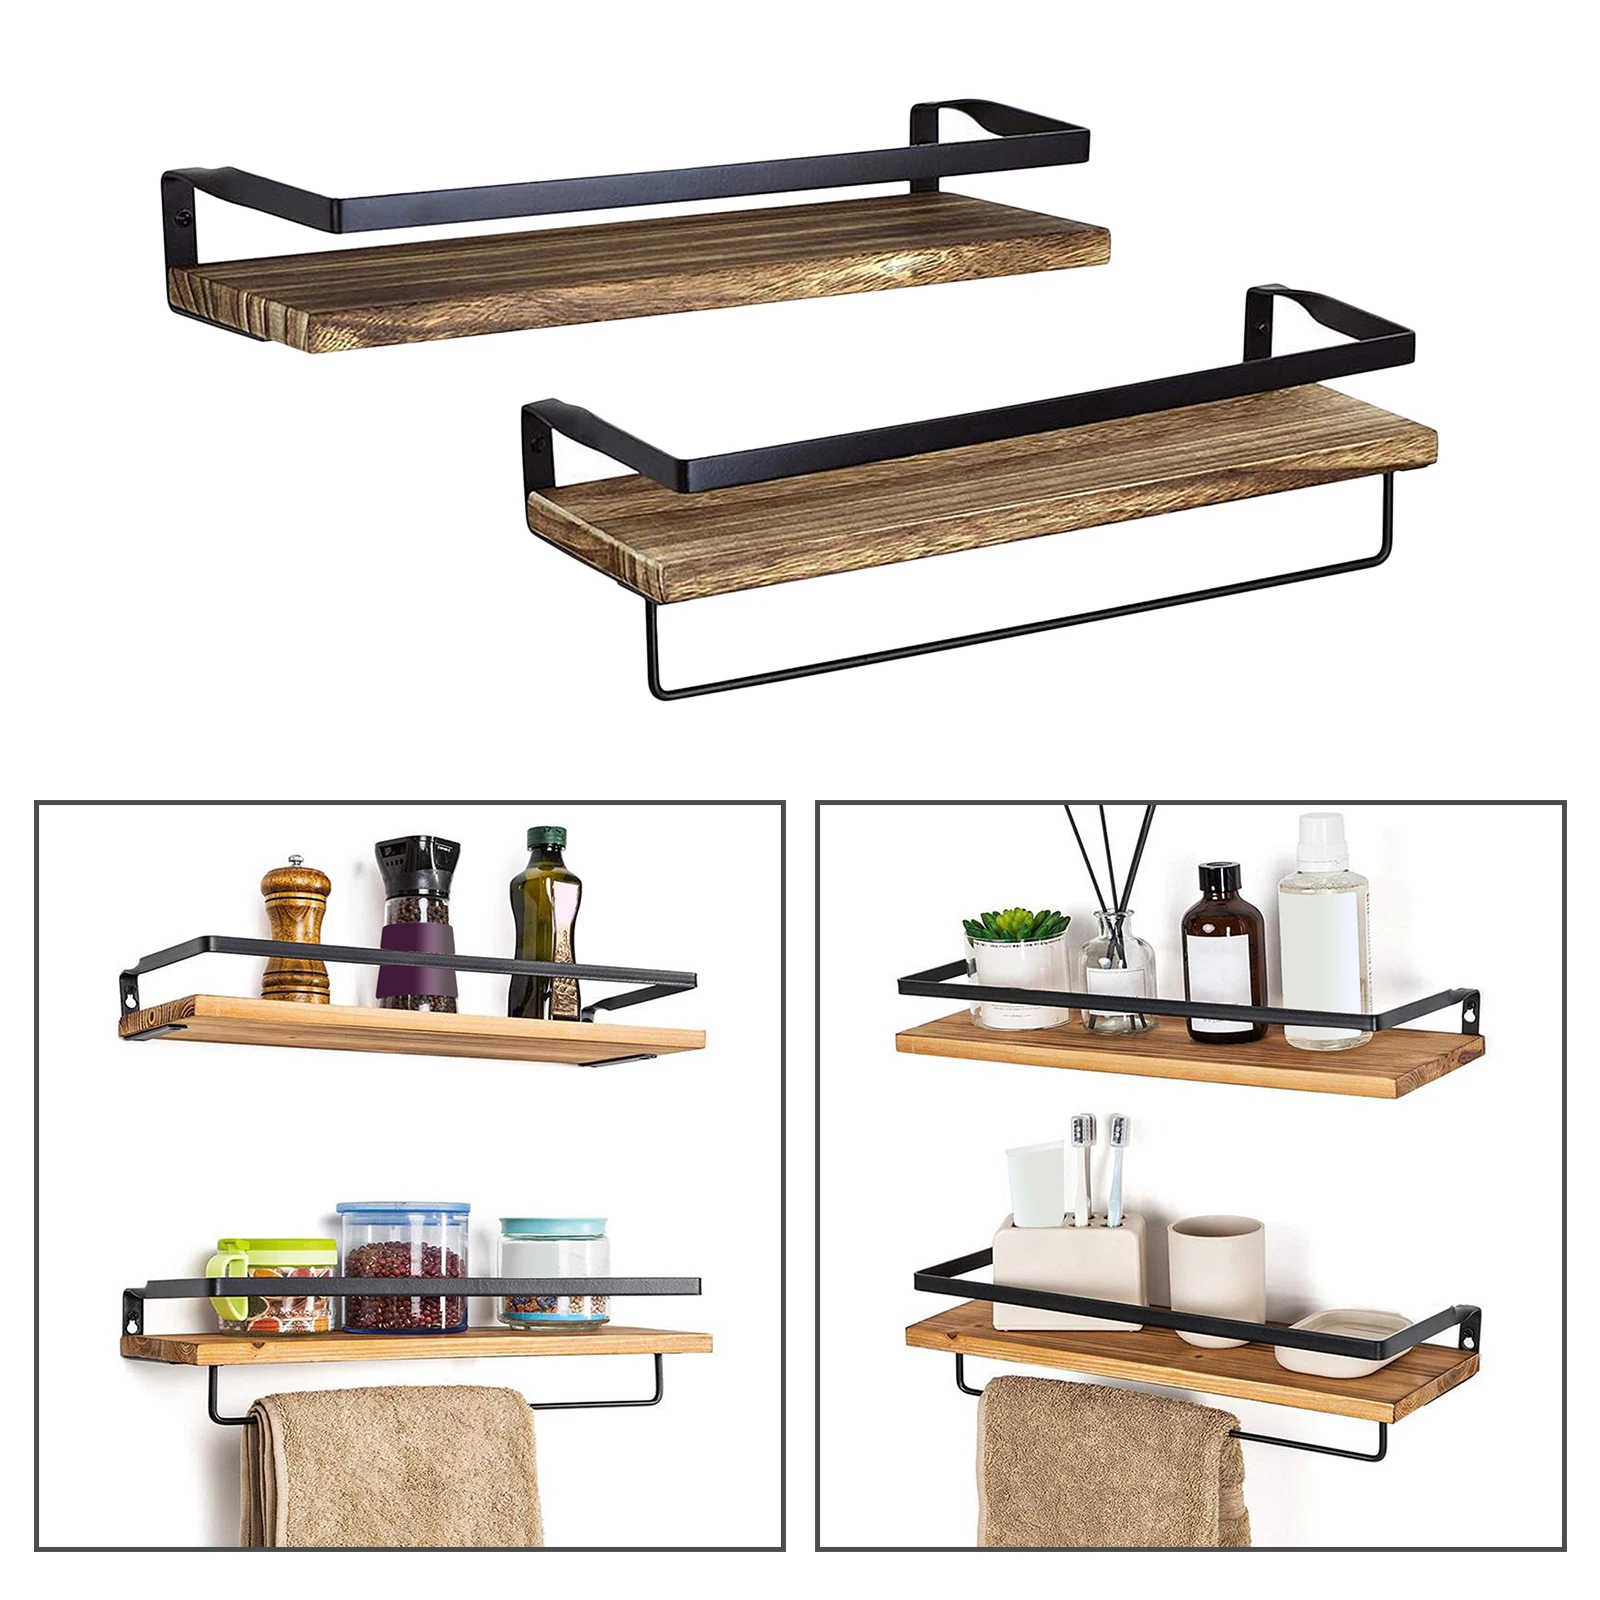 Wood Floating Shelves, Wall Mounted Bathroom Shelf, Rustic Storage Shelves with Removable Towel Holder for Kitchen, Living Room